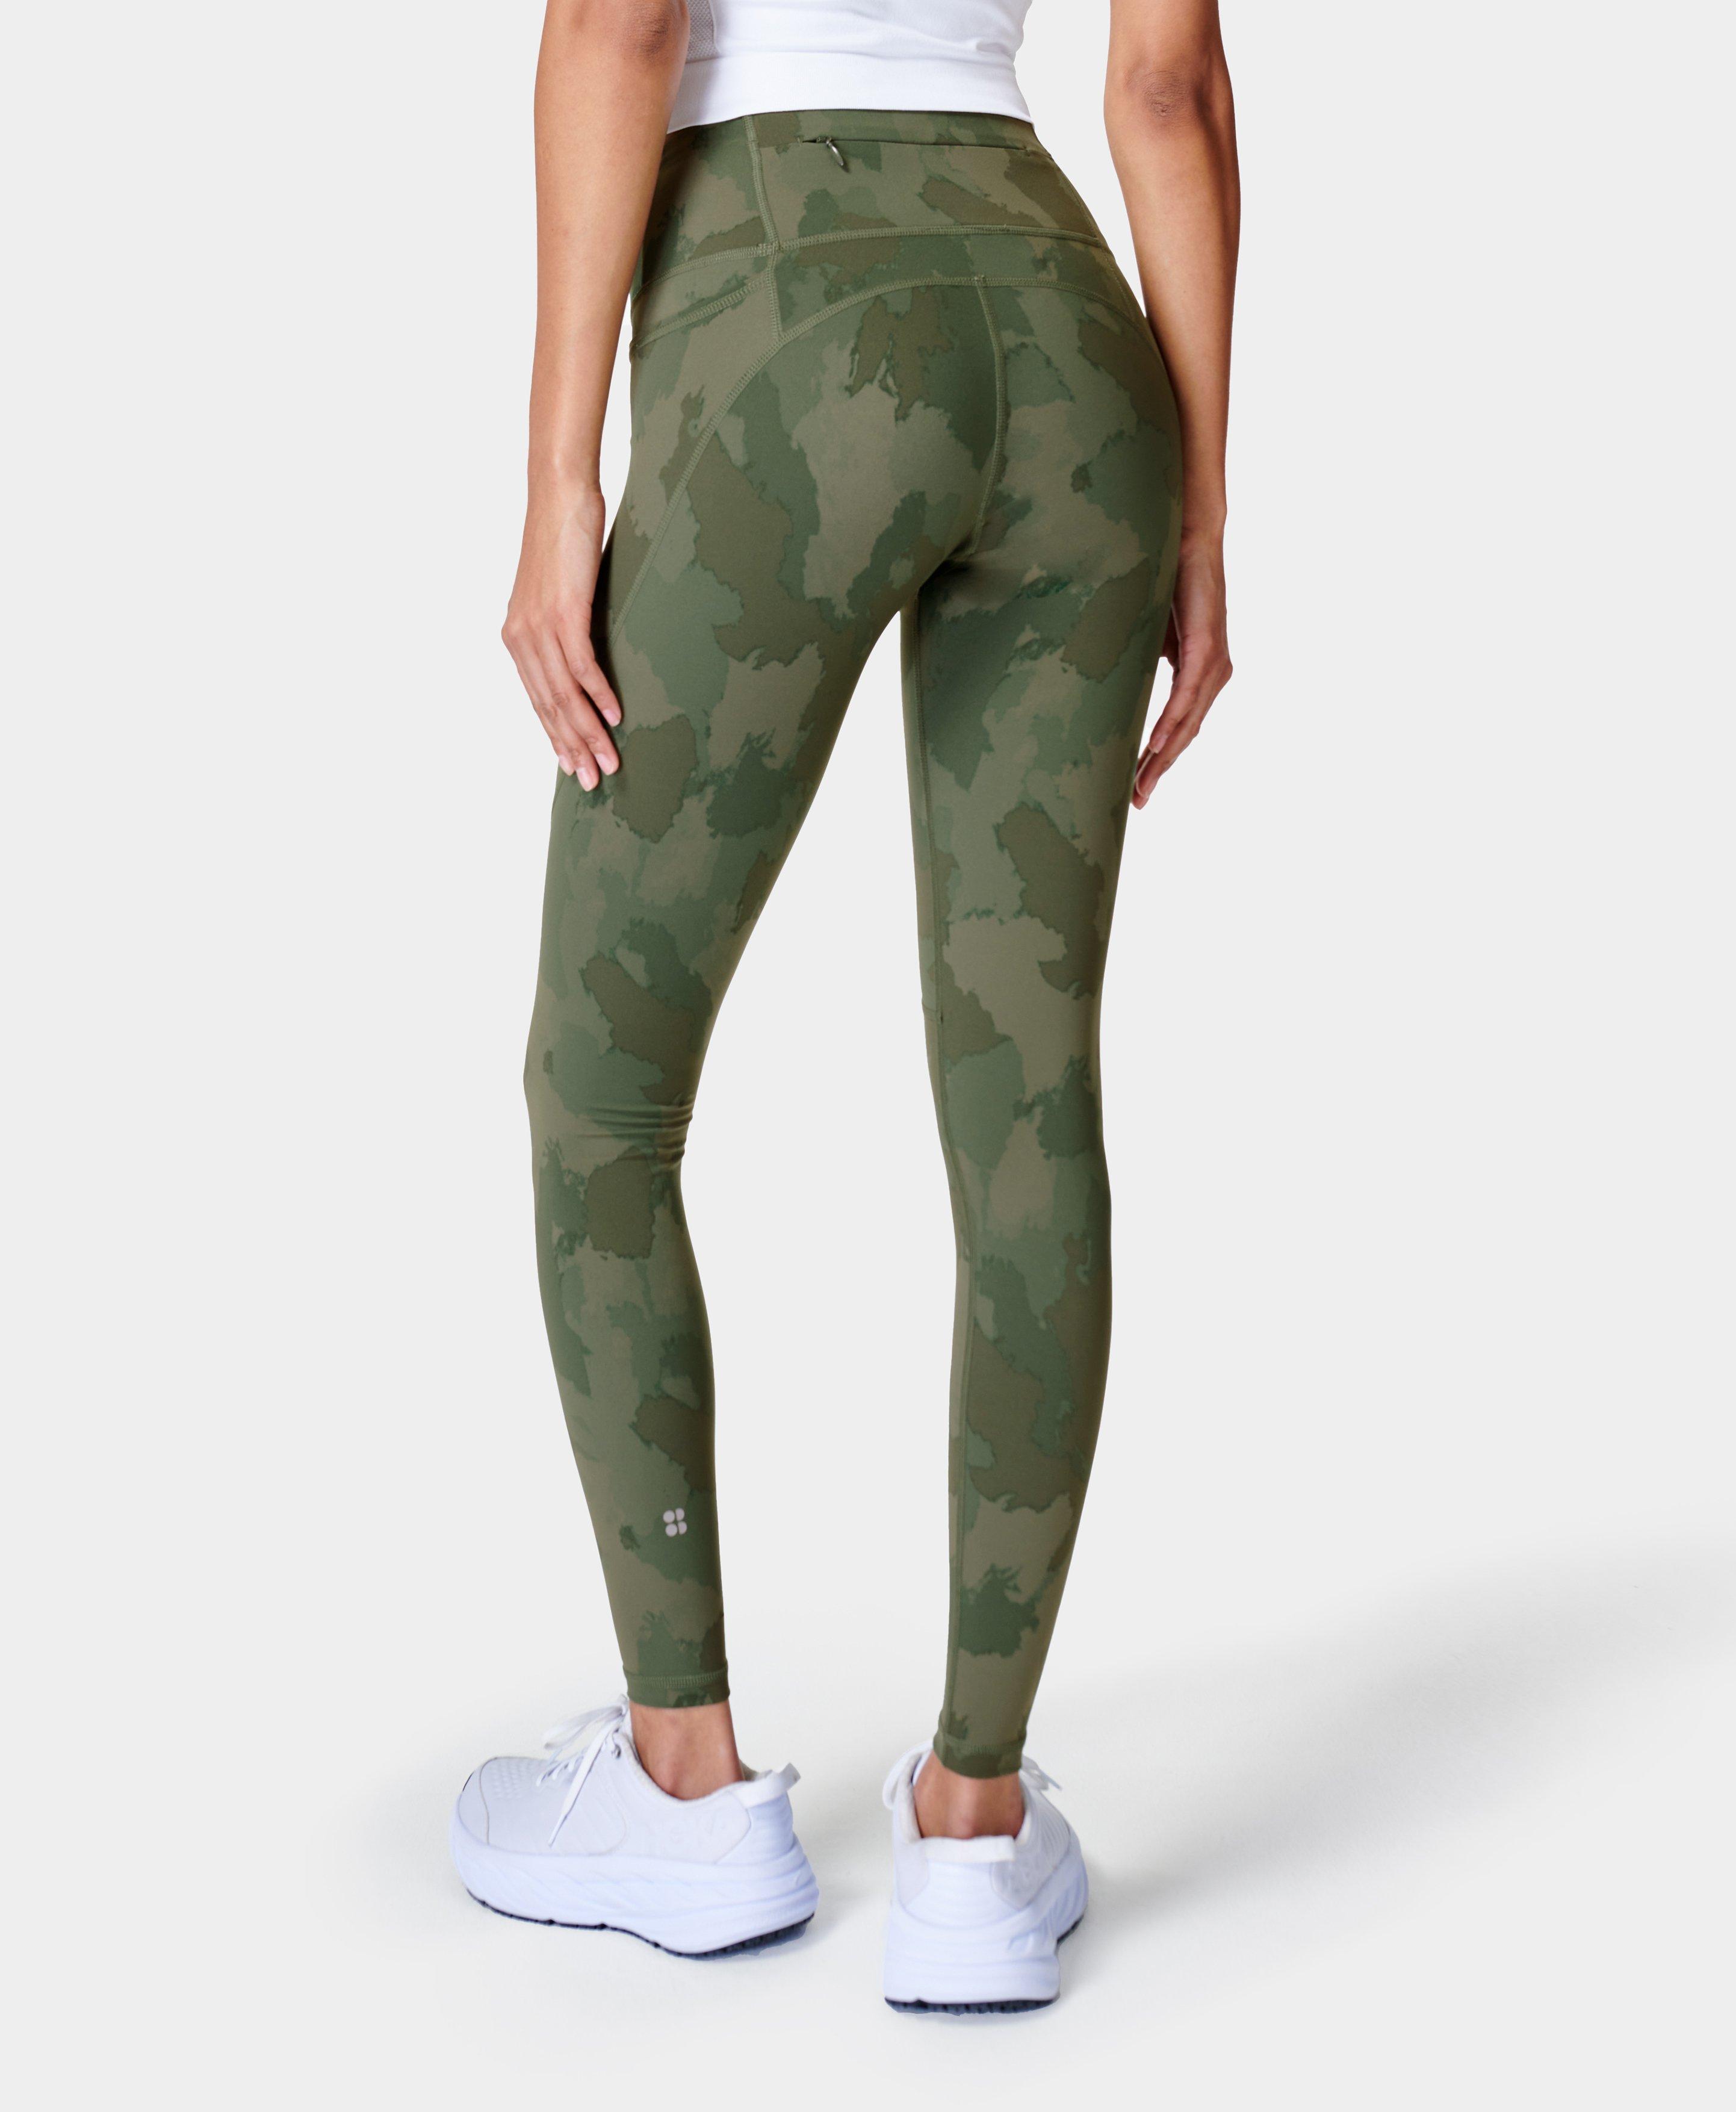 Power Workout Leggings - Green Painted Camo Print, Women's Leggings